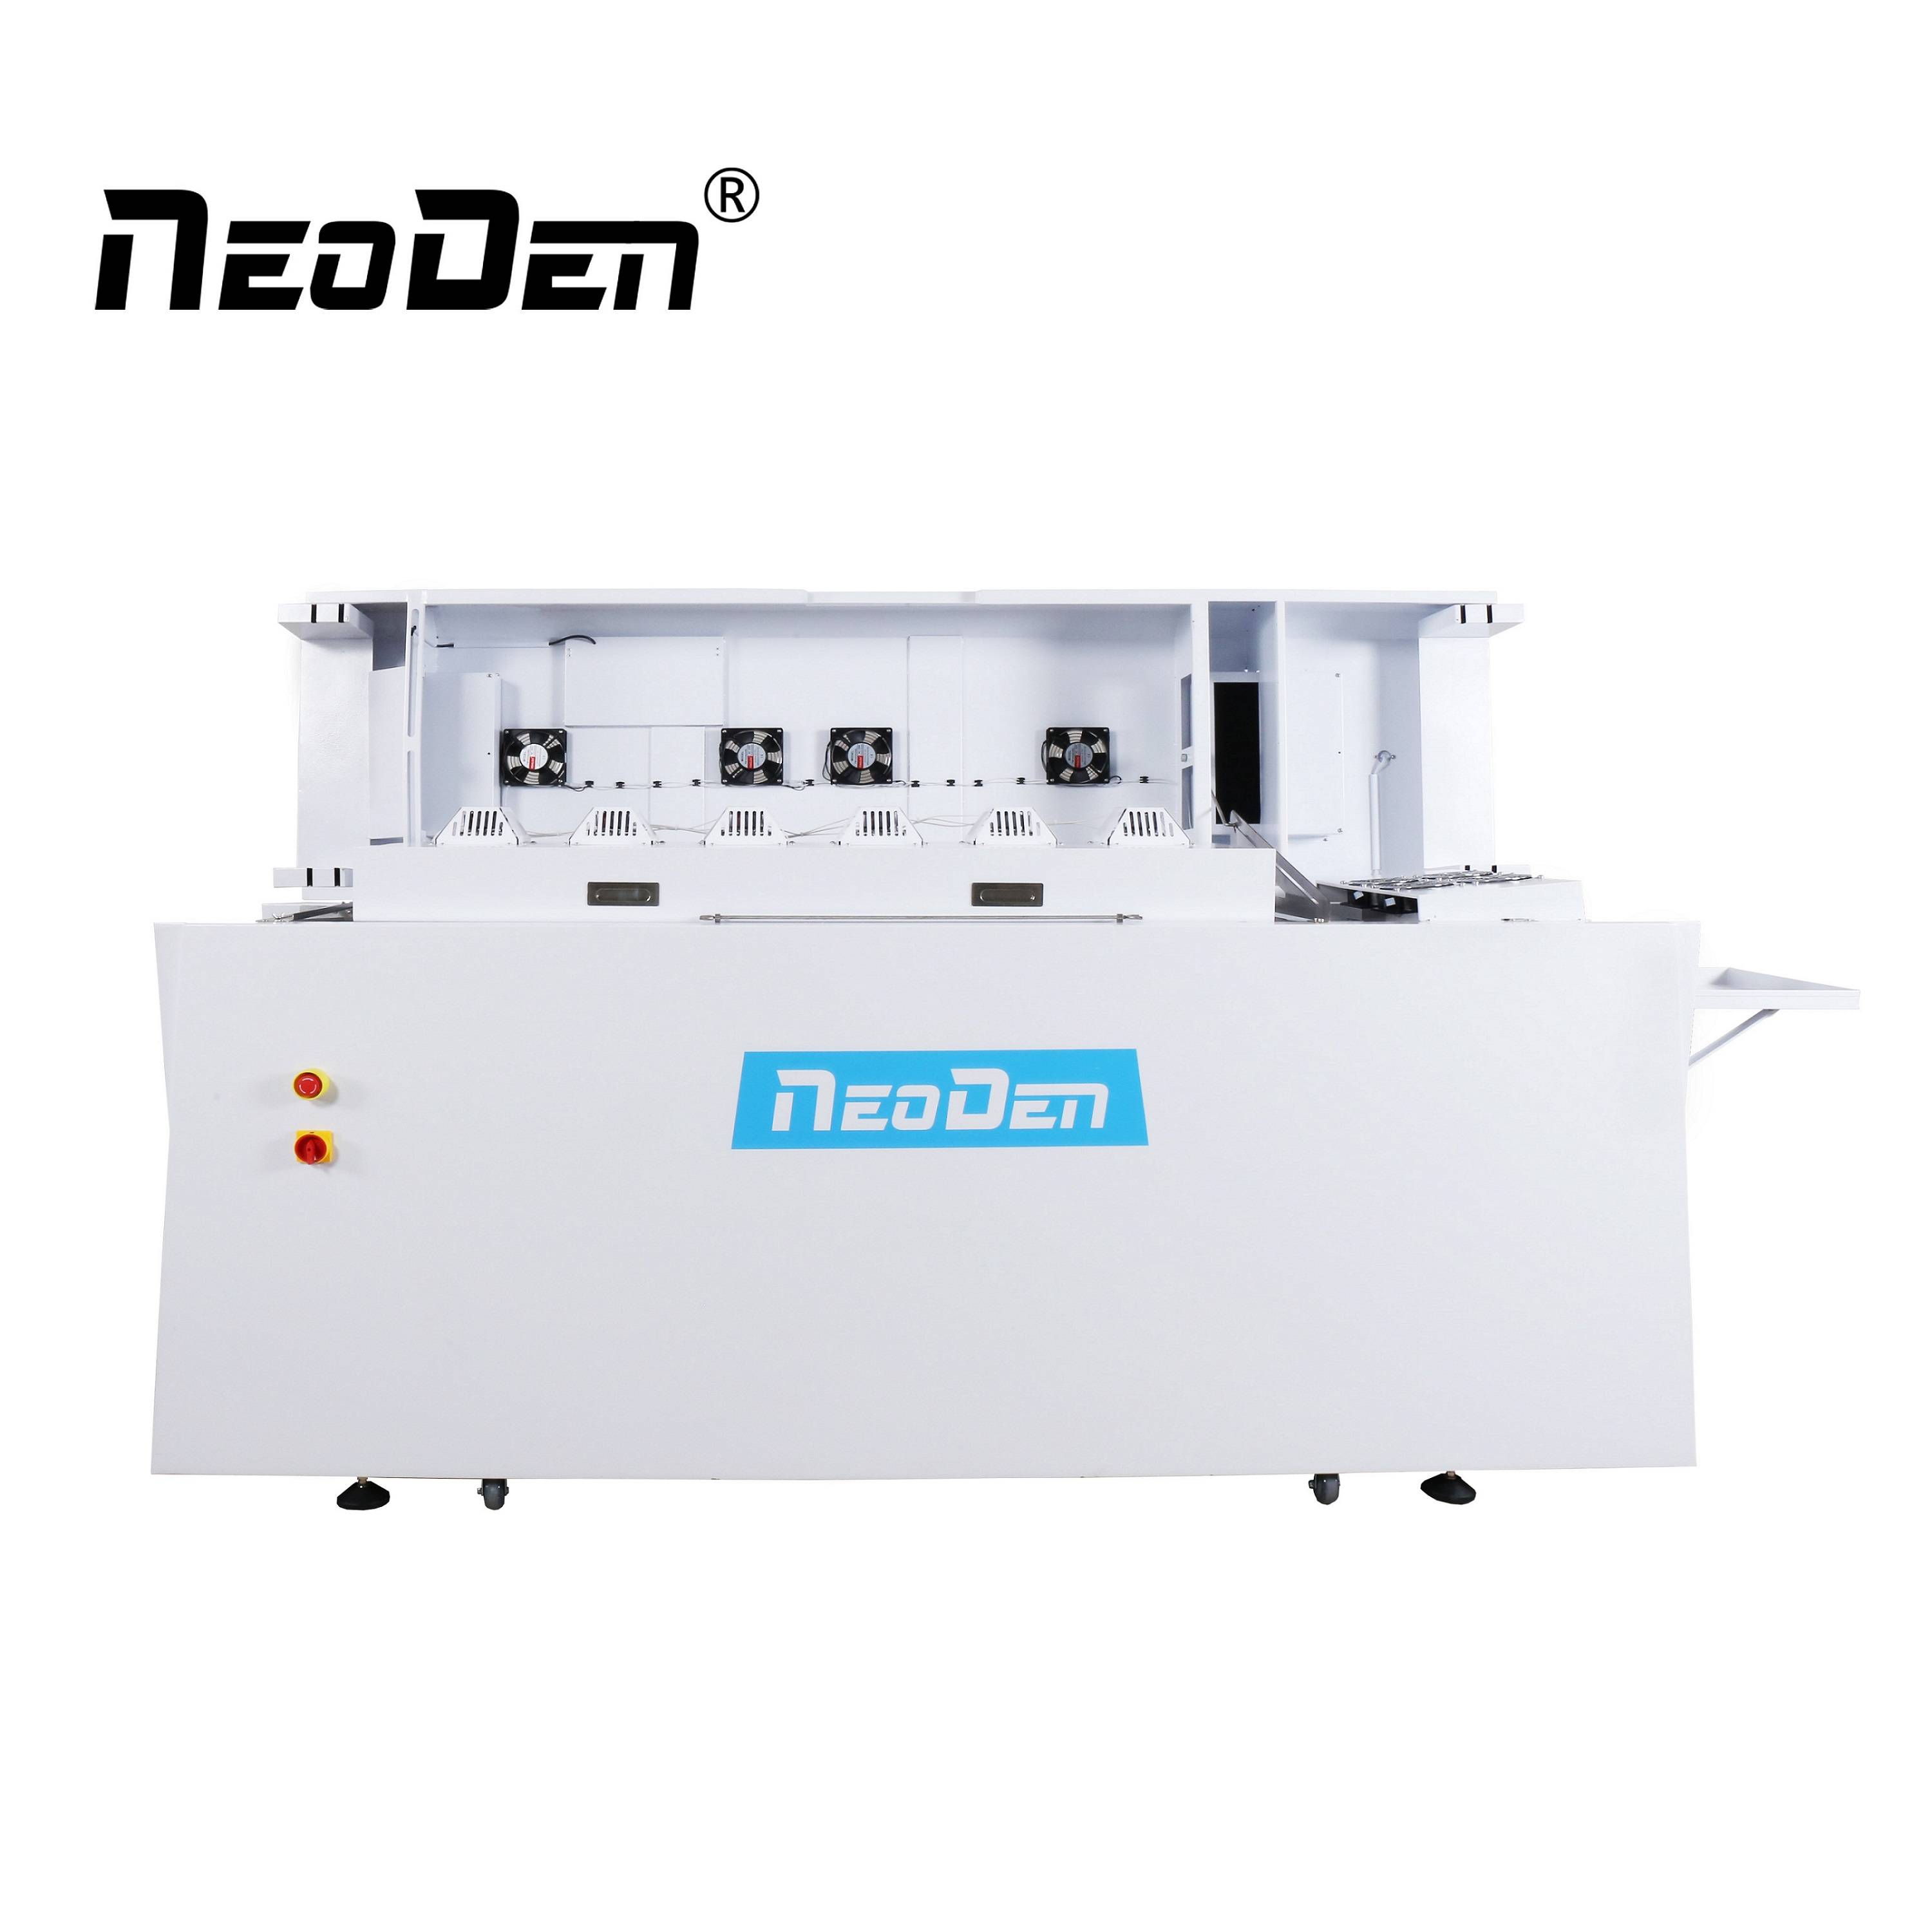 Super Purchasing for Reflow Oven/Solder For Sop Packaging Pcb Welding - NeoDen IN12 reflow oven for PCB welding – Neoden